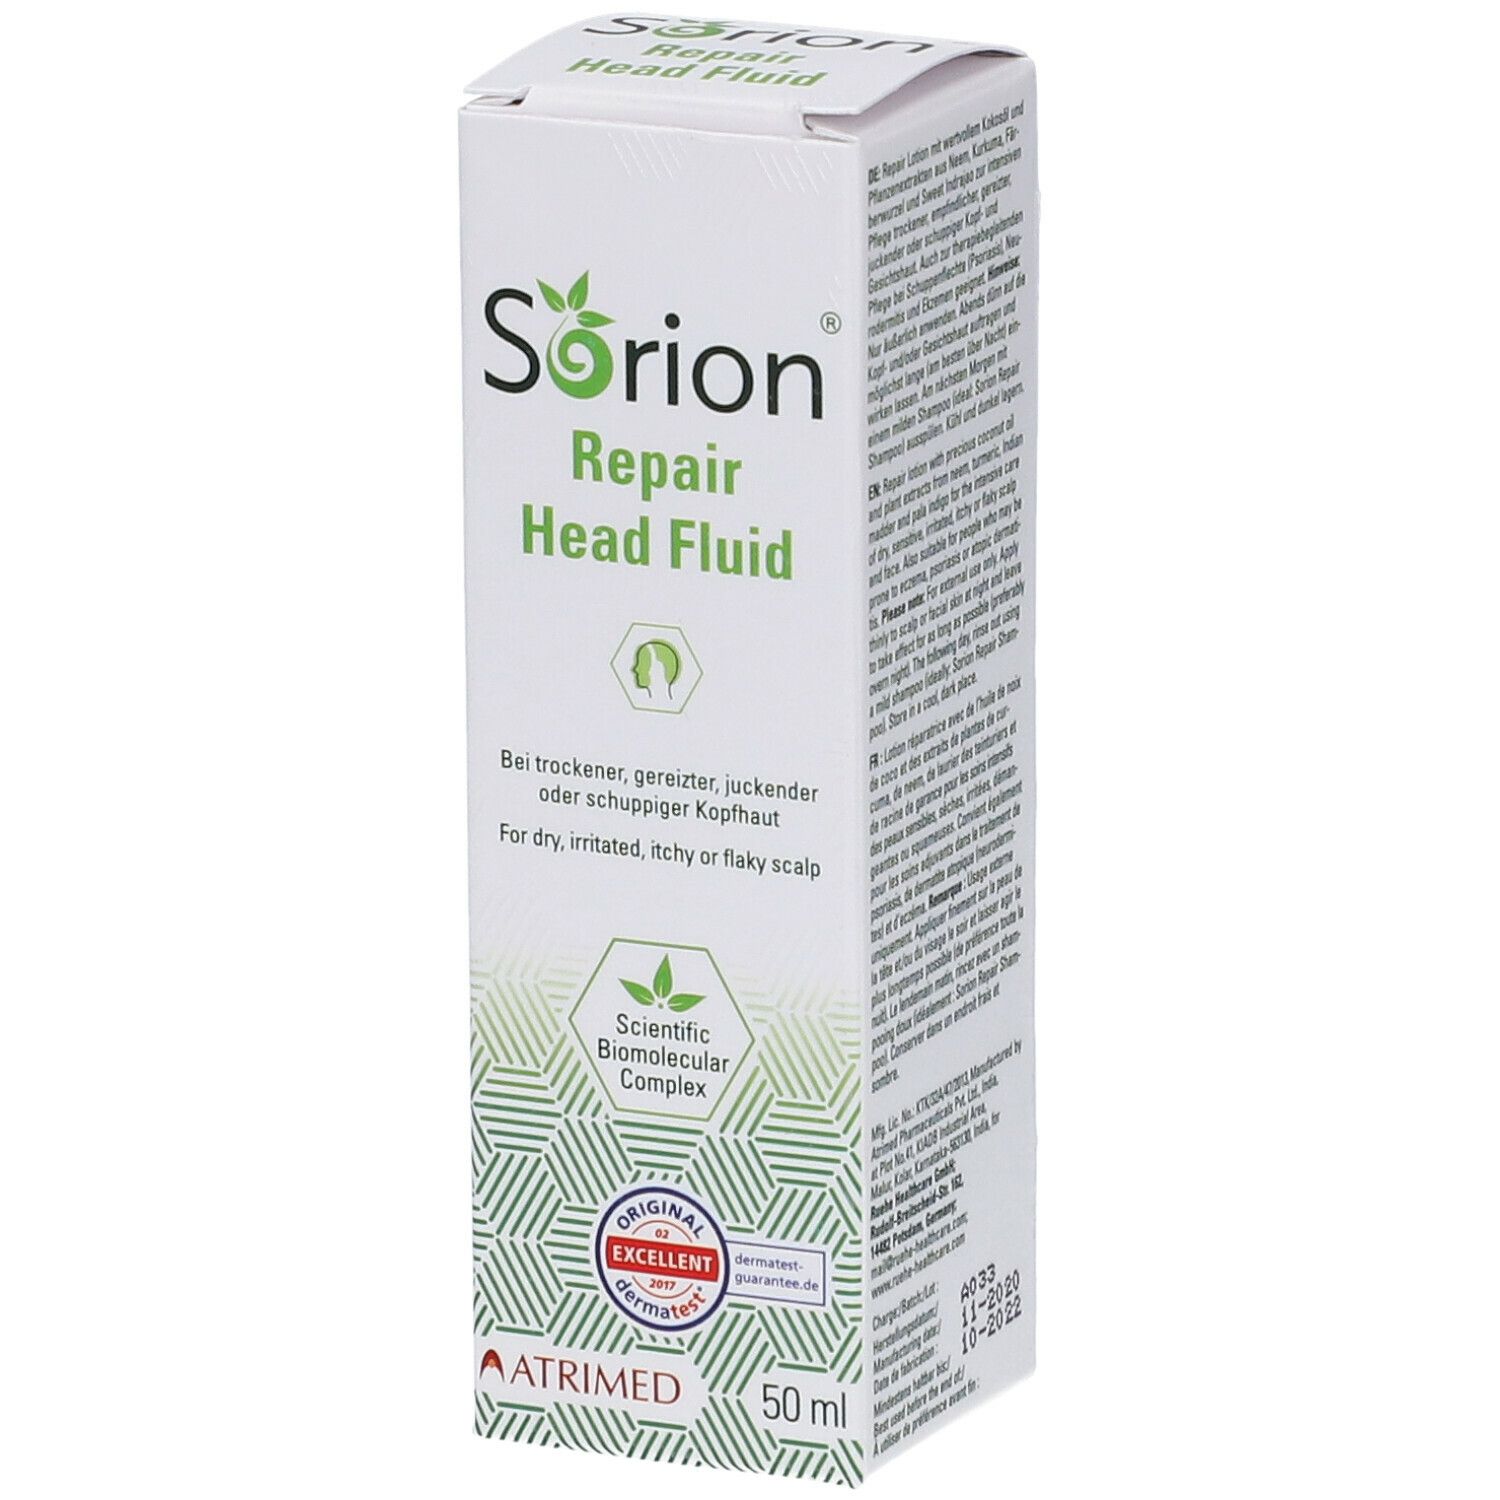 Sorion® Head Fluid